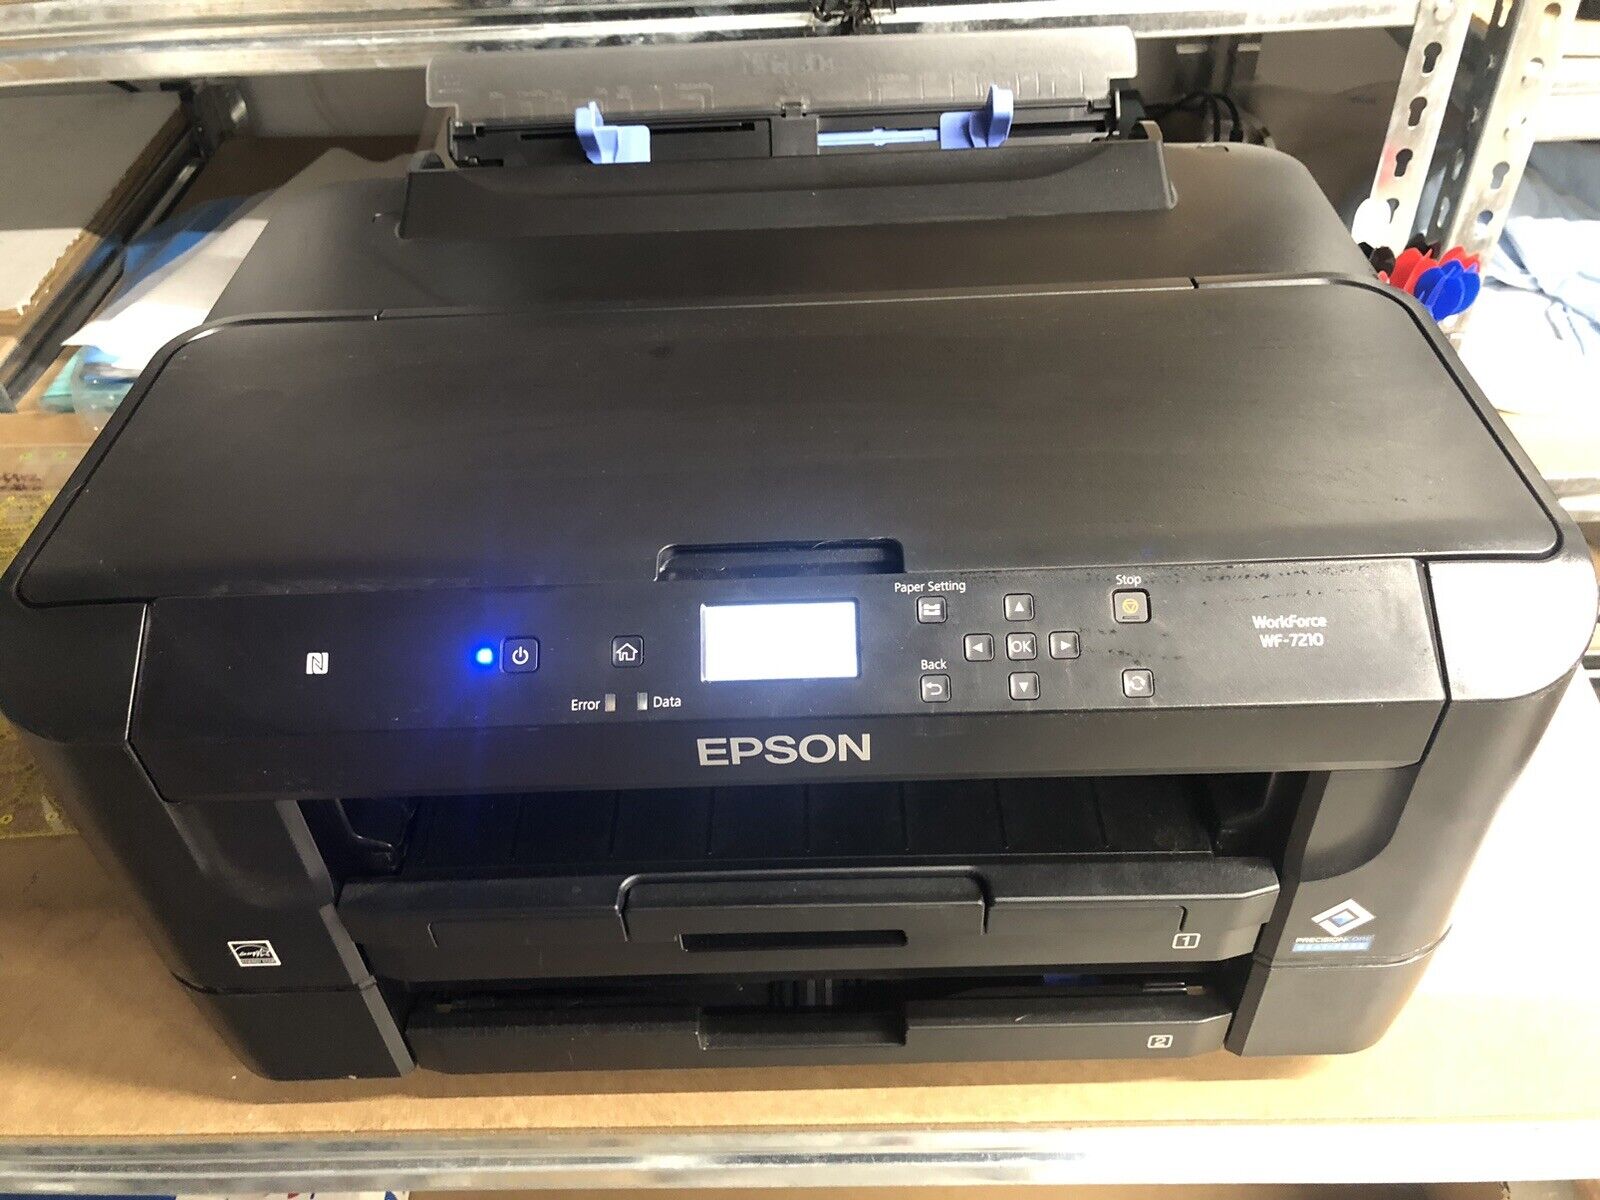 Epson WorkForce WF-7210 Inkjet Photo Printer  - (Good Condition)